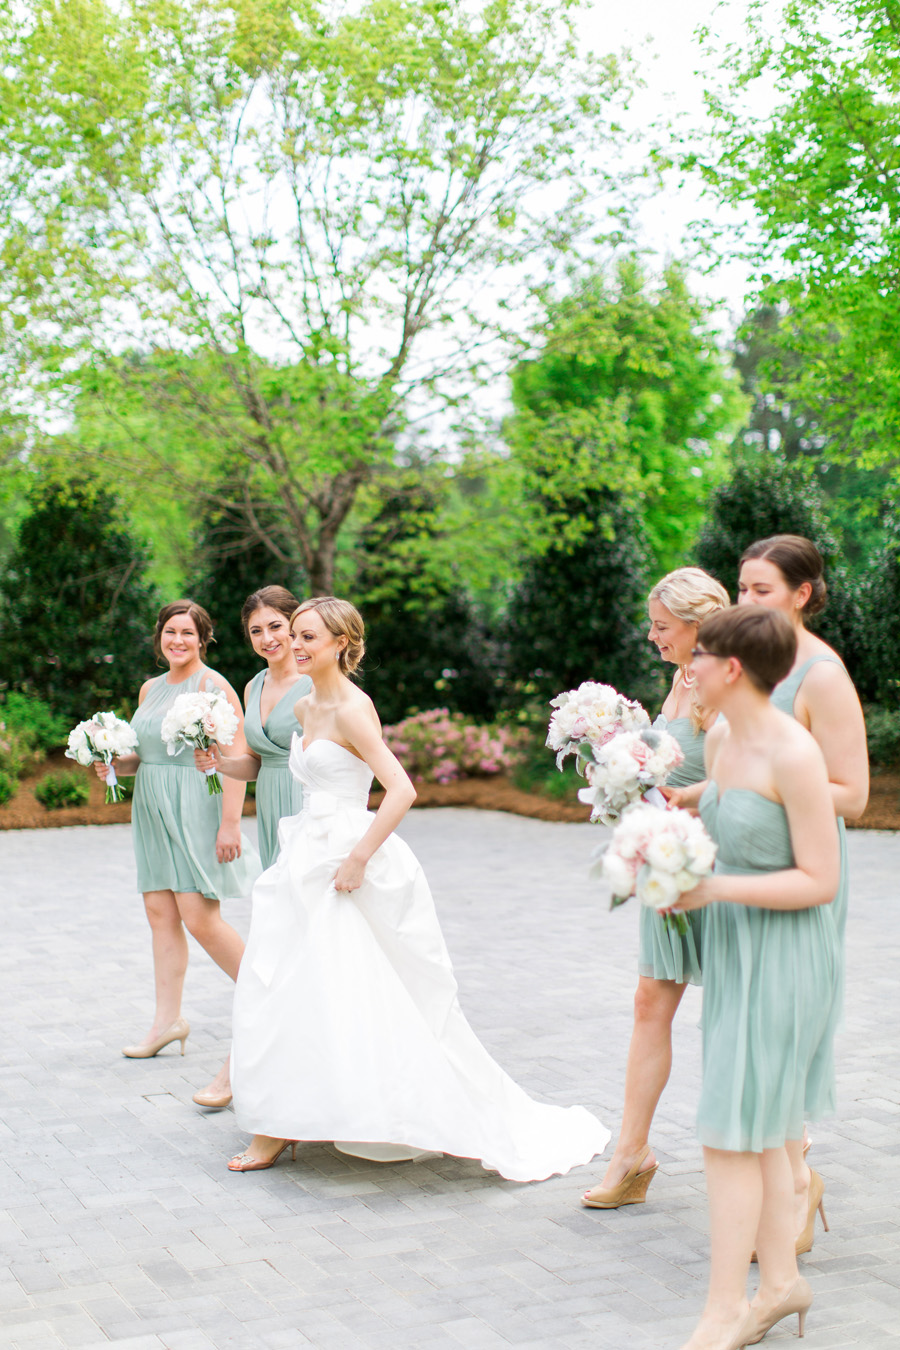 Bridesmaids in Mint Dresses